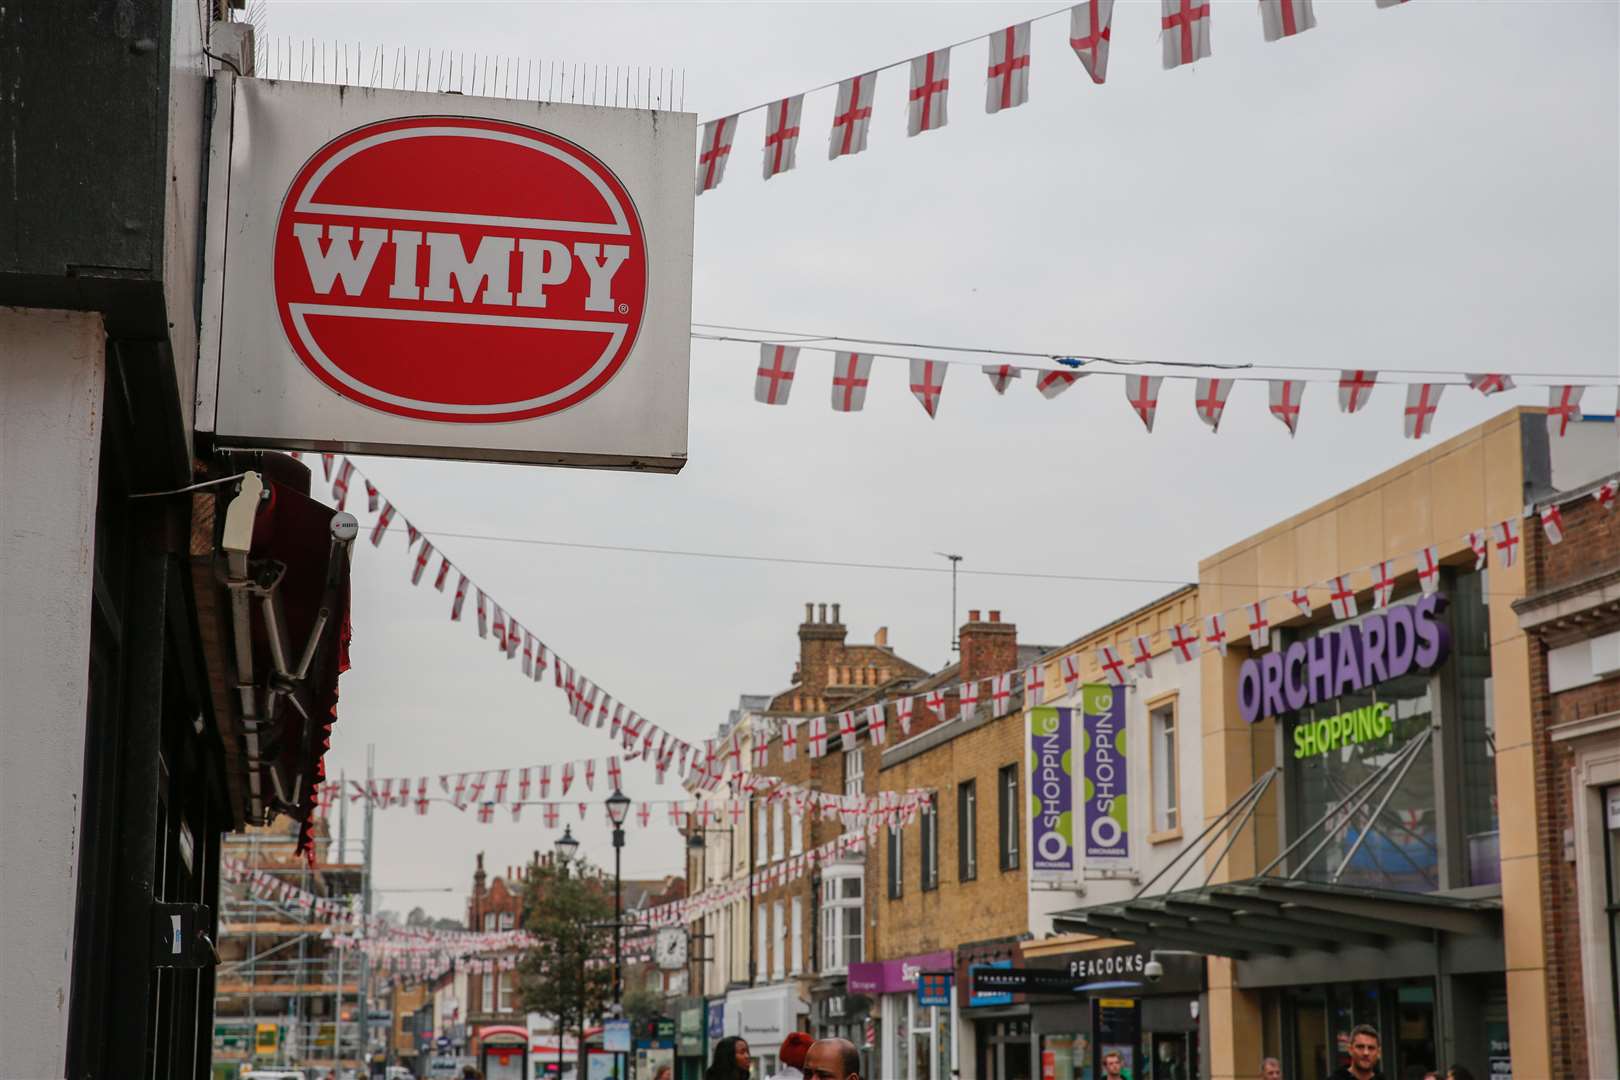 Wimpy in Dartford High Street